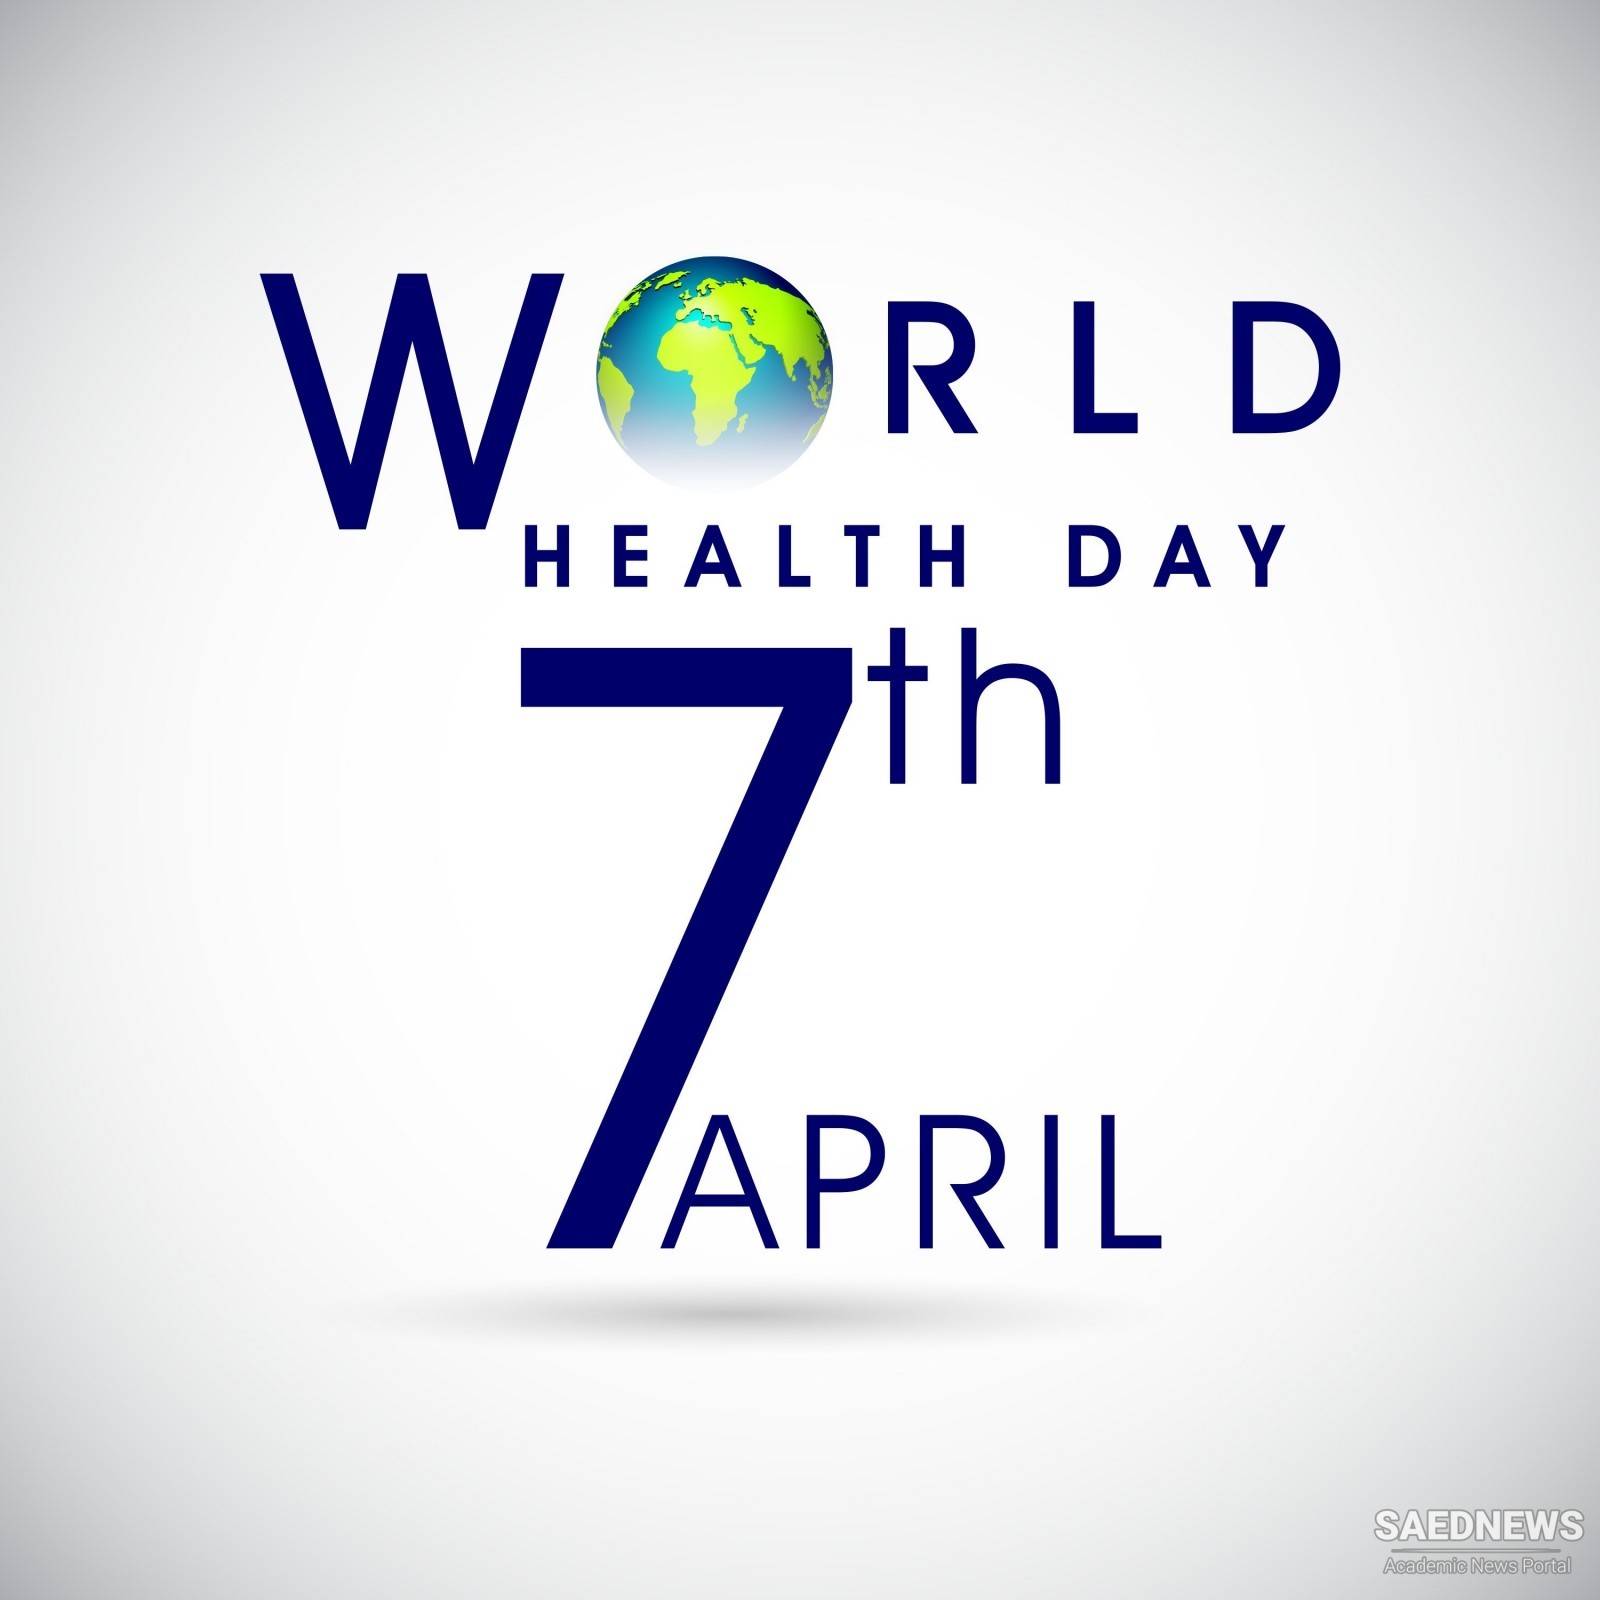 विश्व स्वास्थ्य दिवस 2021: एक निष्पक्ष निर्माण, स्वस्थ दुनिया